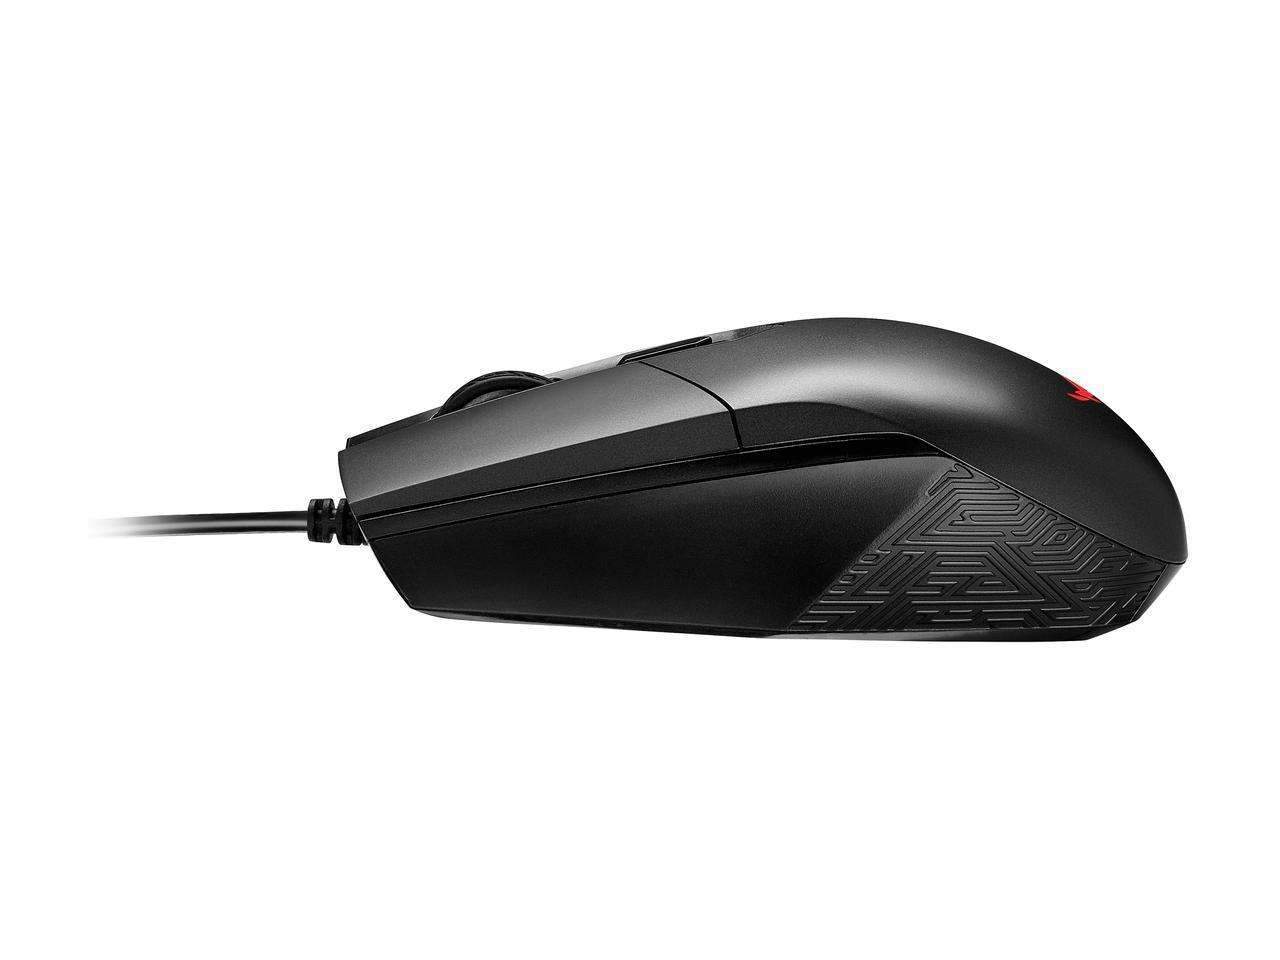 Asus Rog Strix Impact Aura Usb Optical Gaming Mouse Level Up